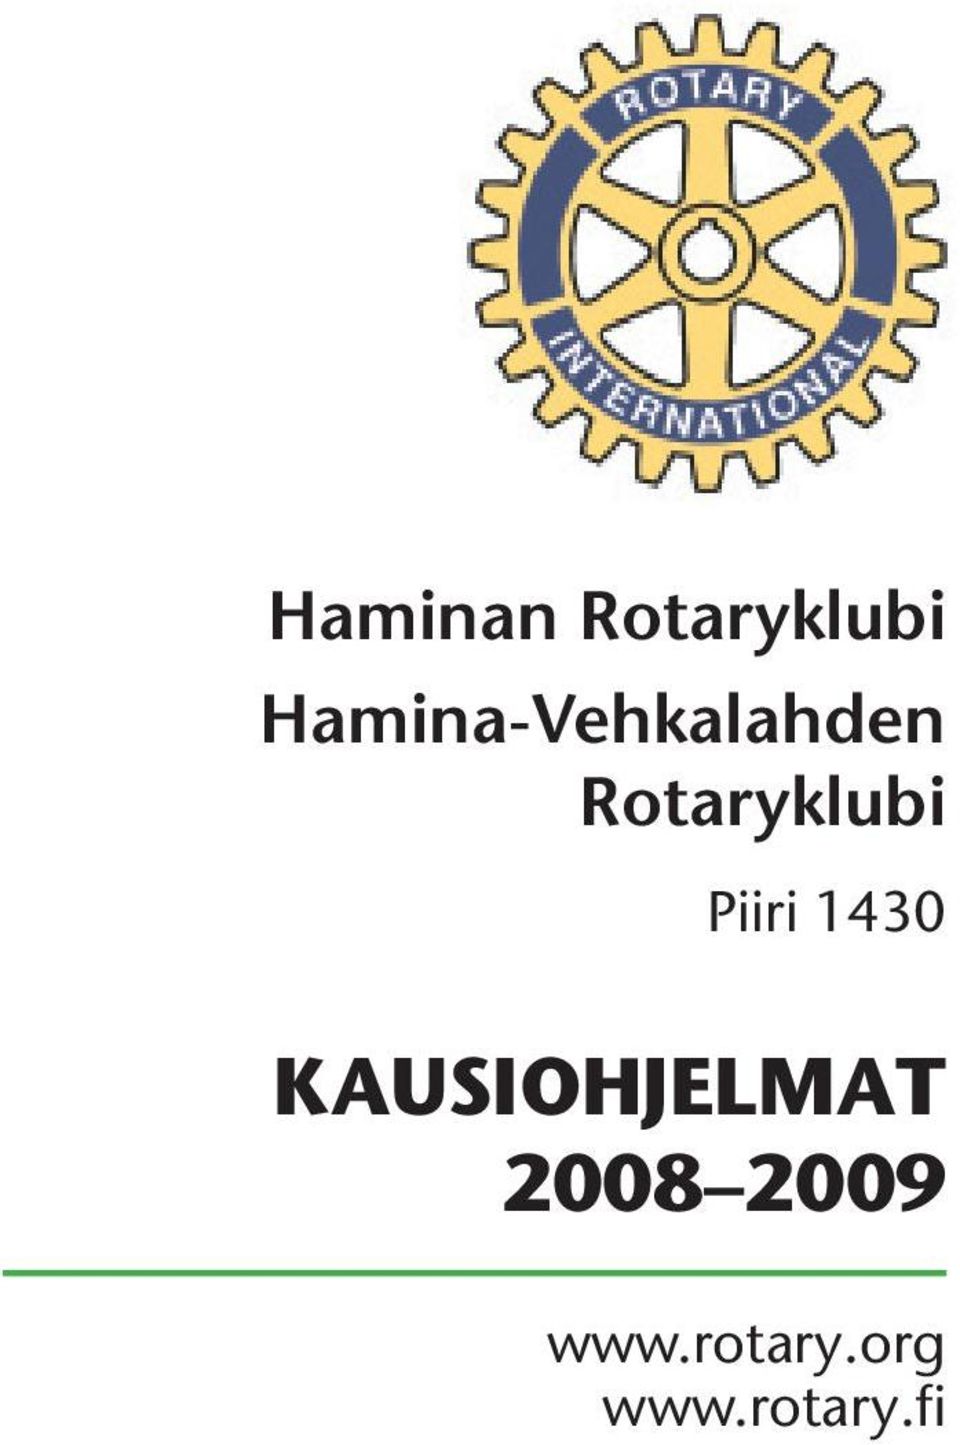 Rotaryklubi Piiri 1430